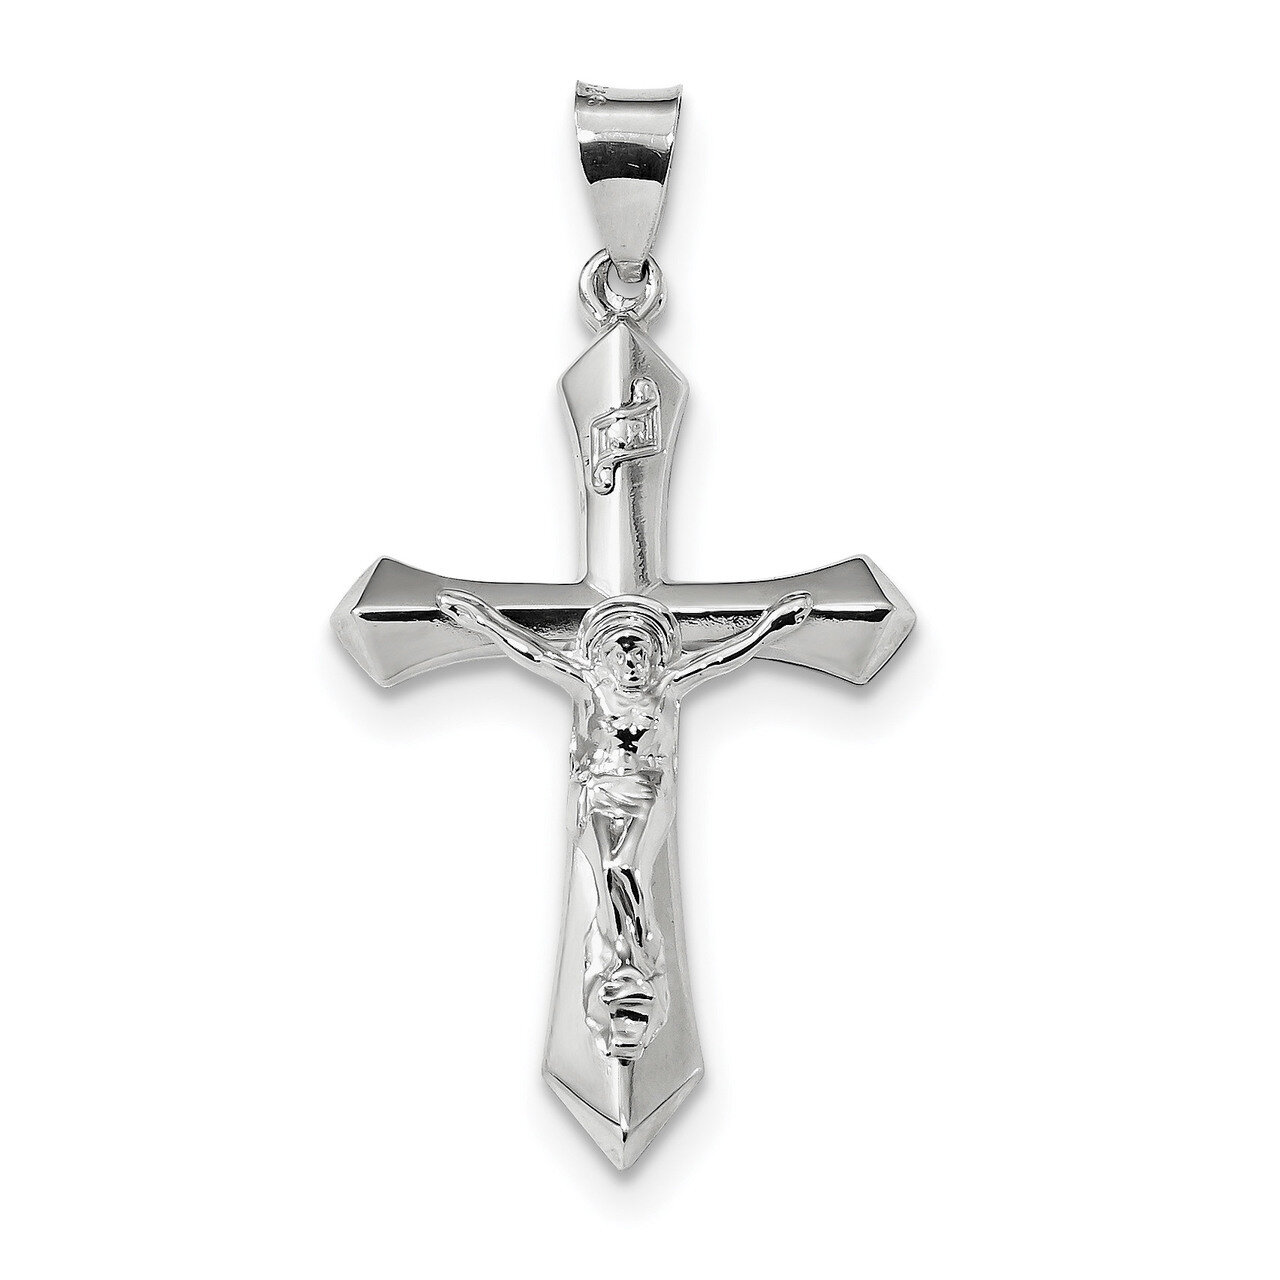 INRI Crucifix Pendant Sterling Silver Rhodium-plated Polished QC9100